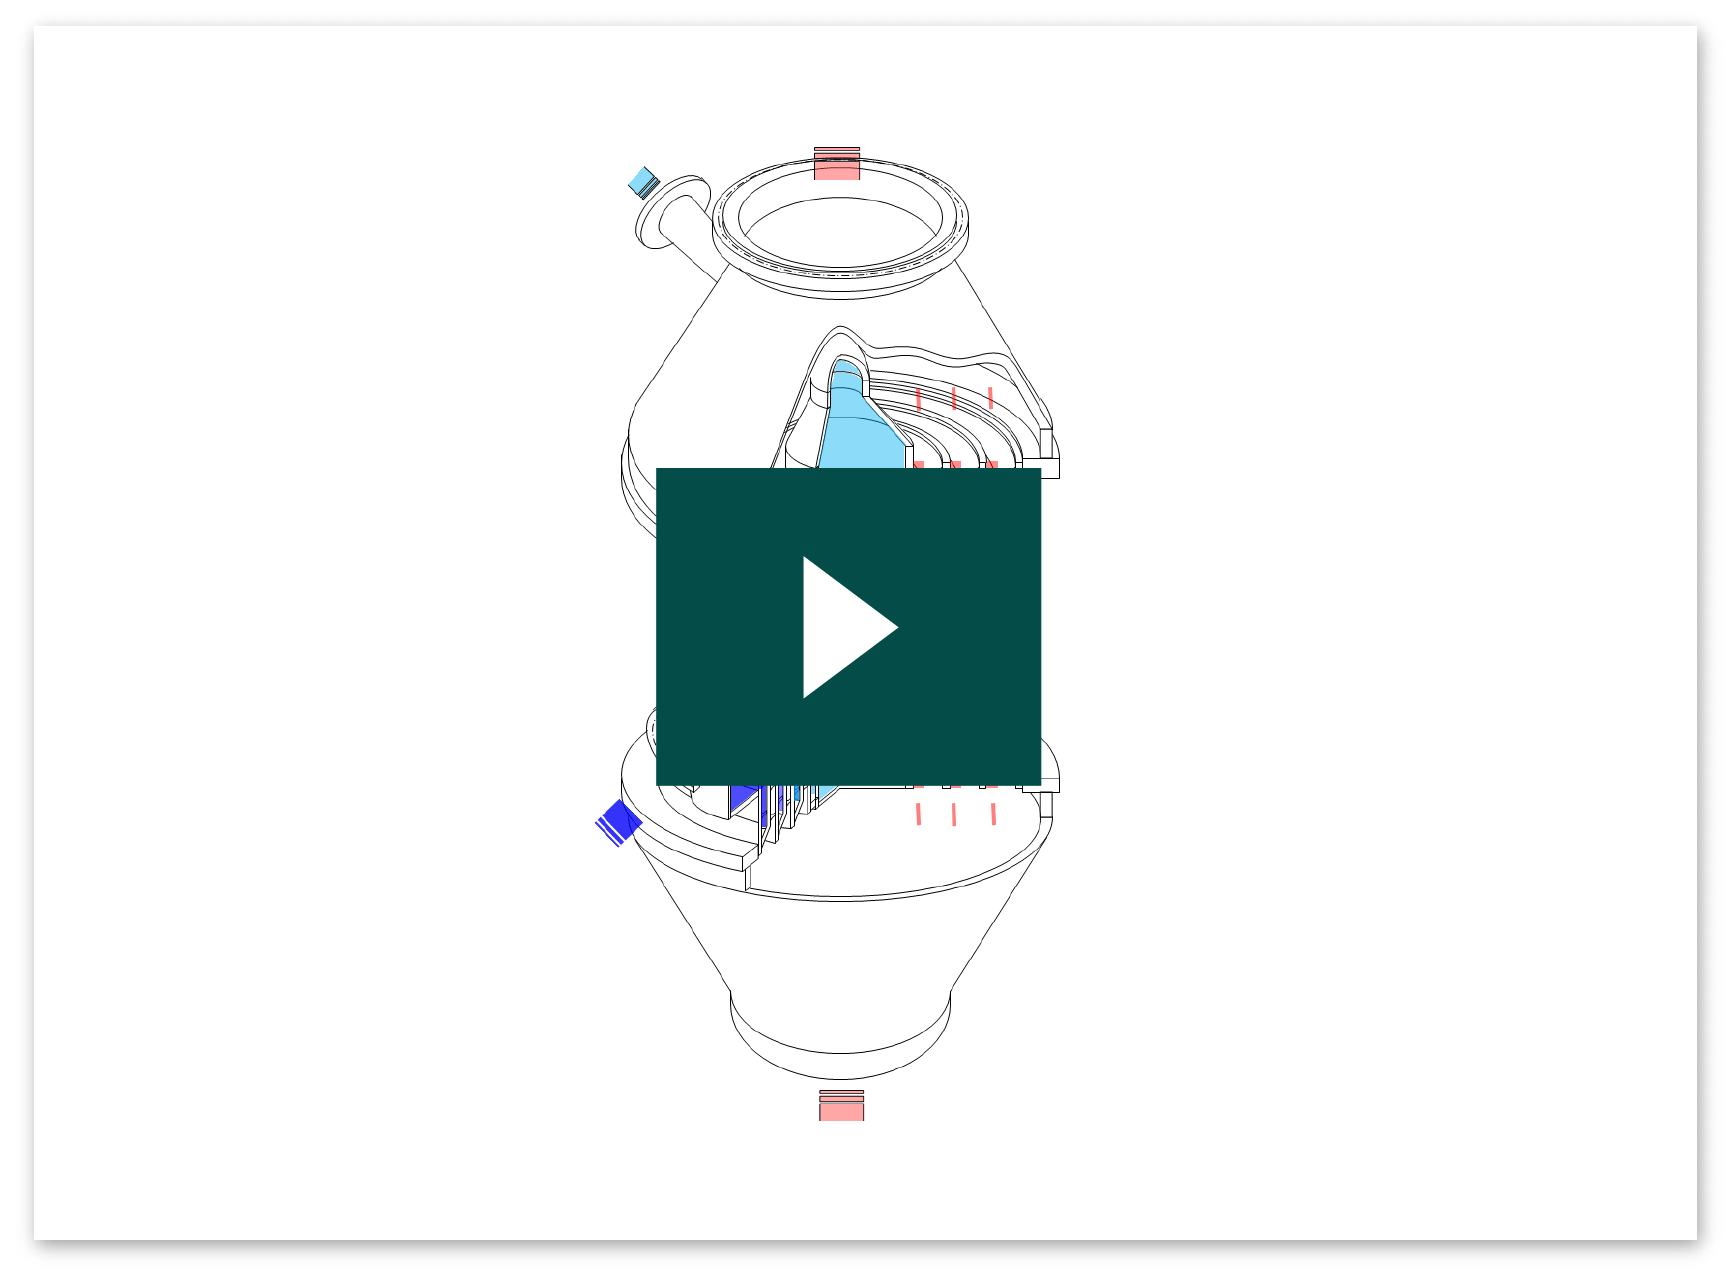 Spiral plate Heat Exchanger working principle video thumbnail